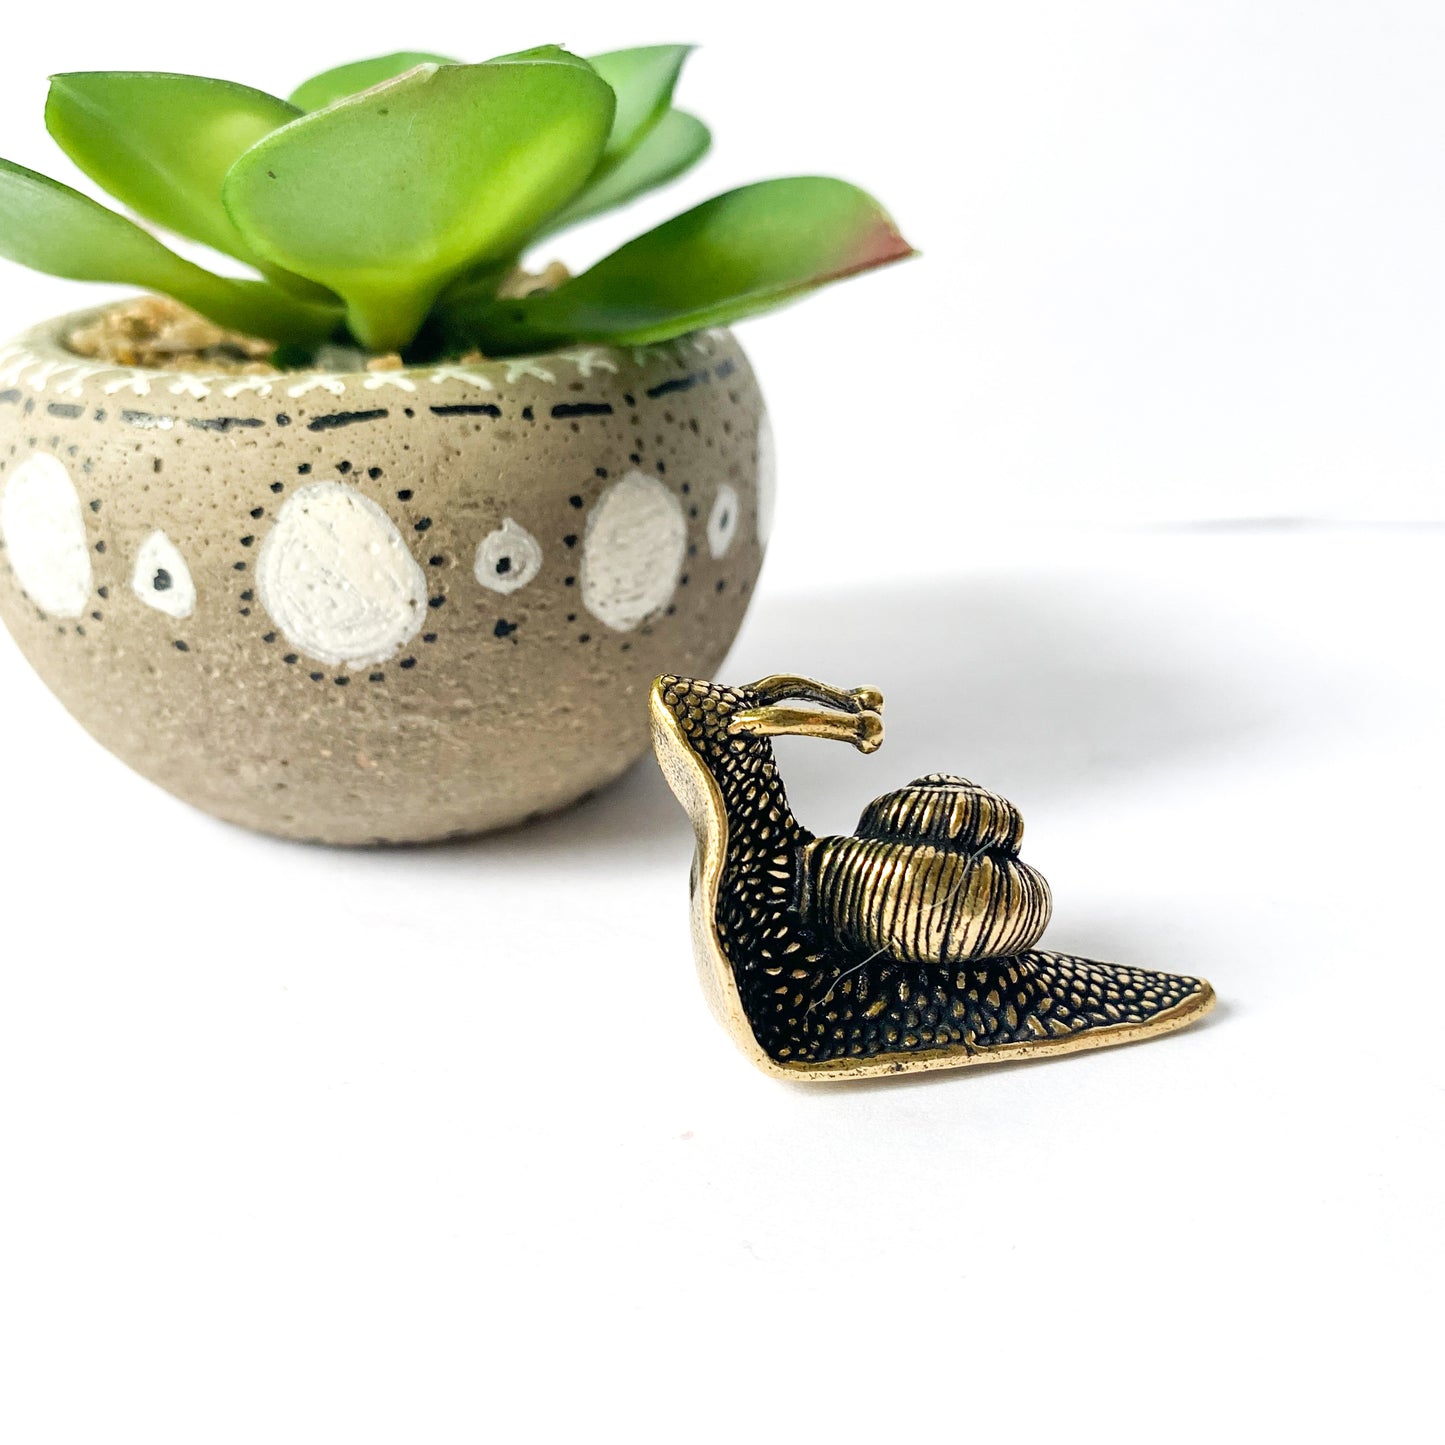 Miniature brass snail figurine